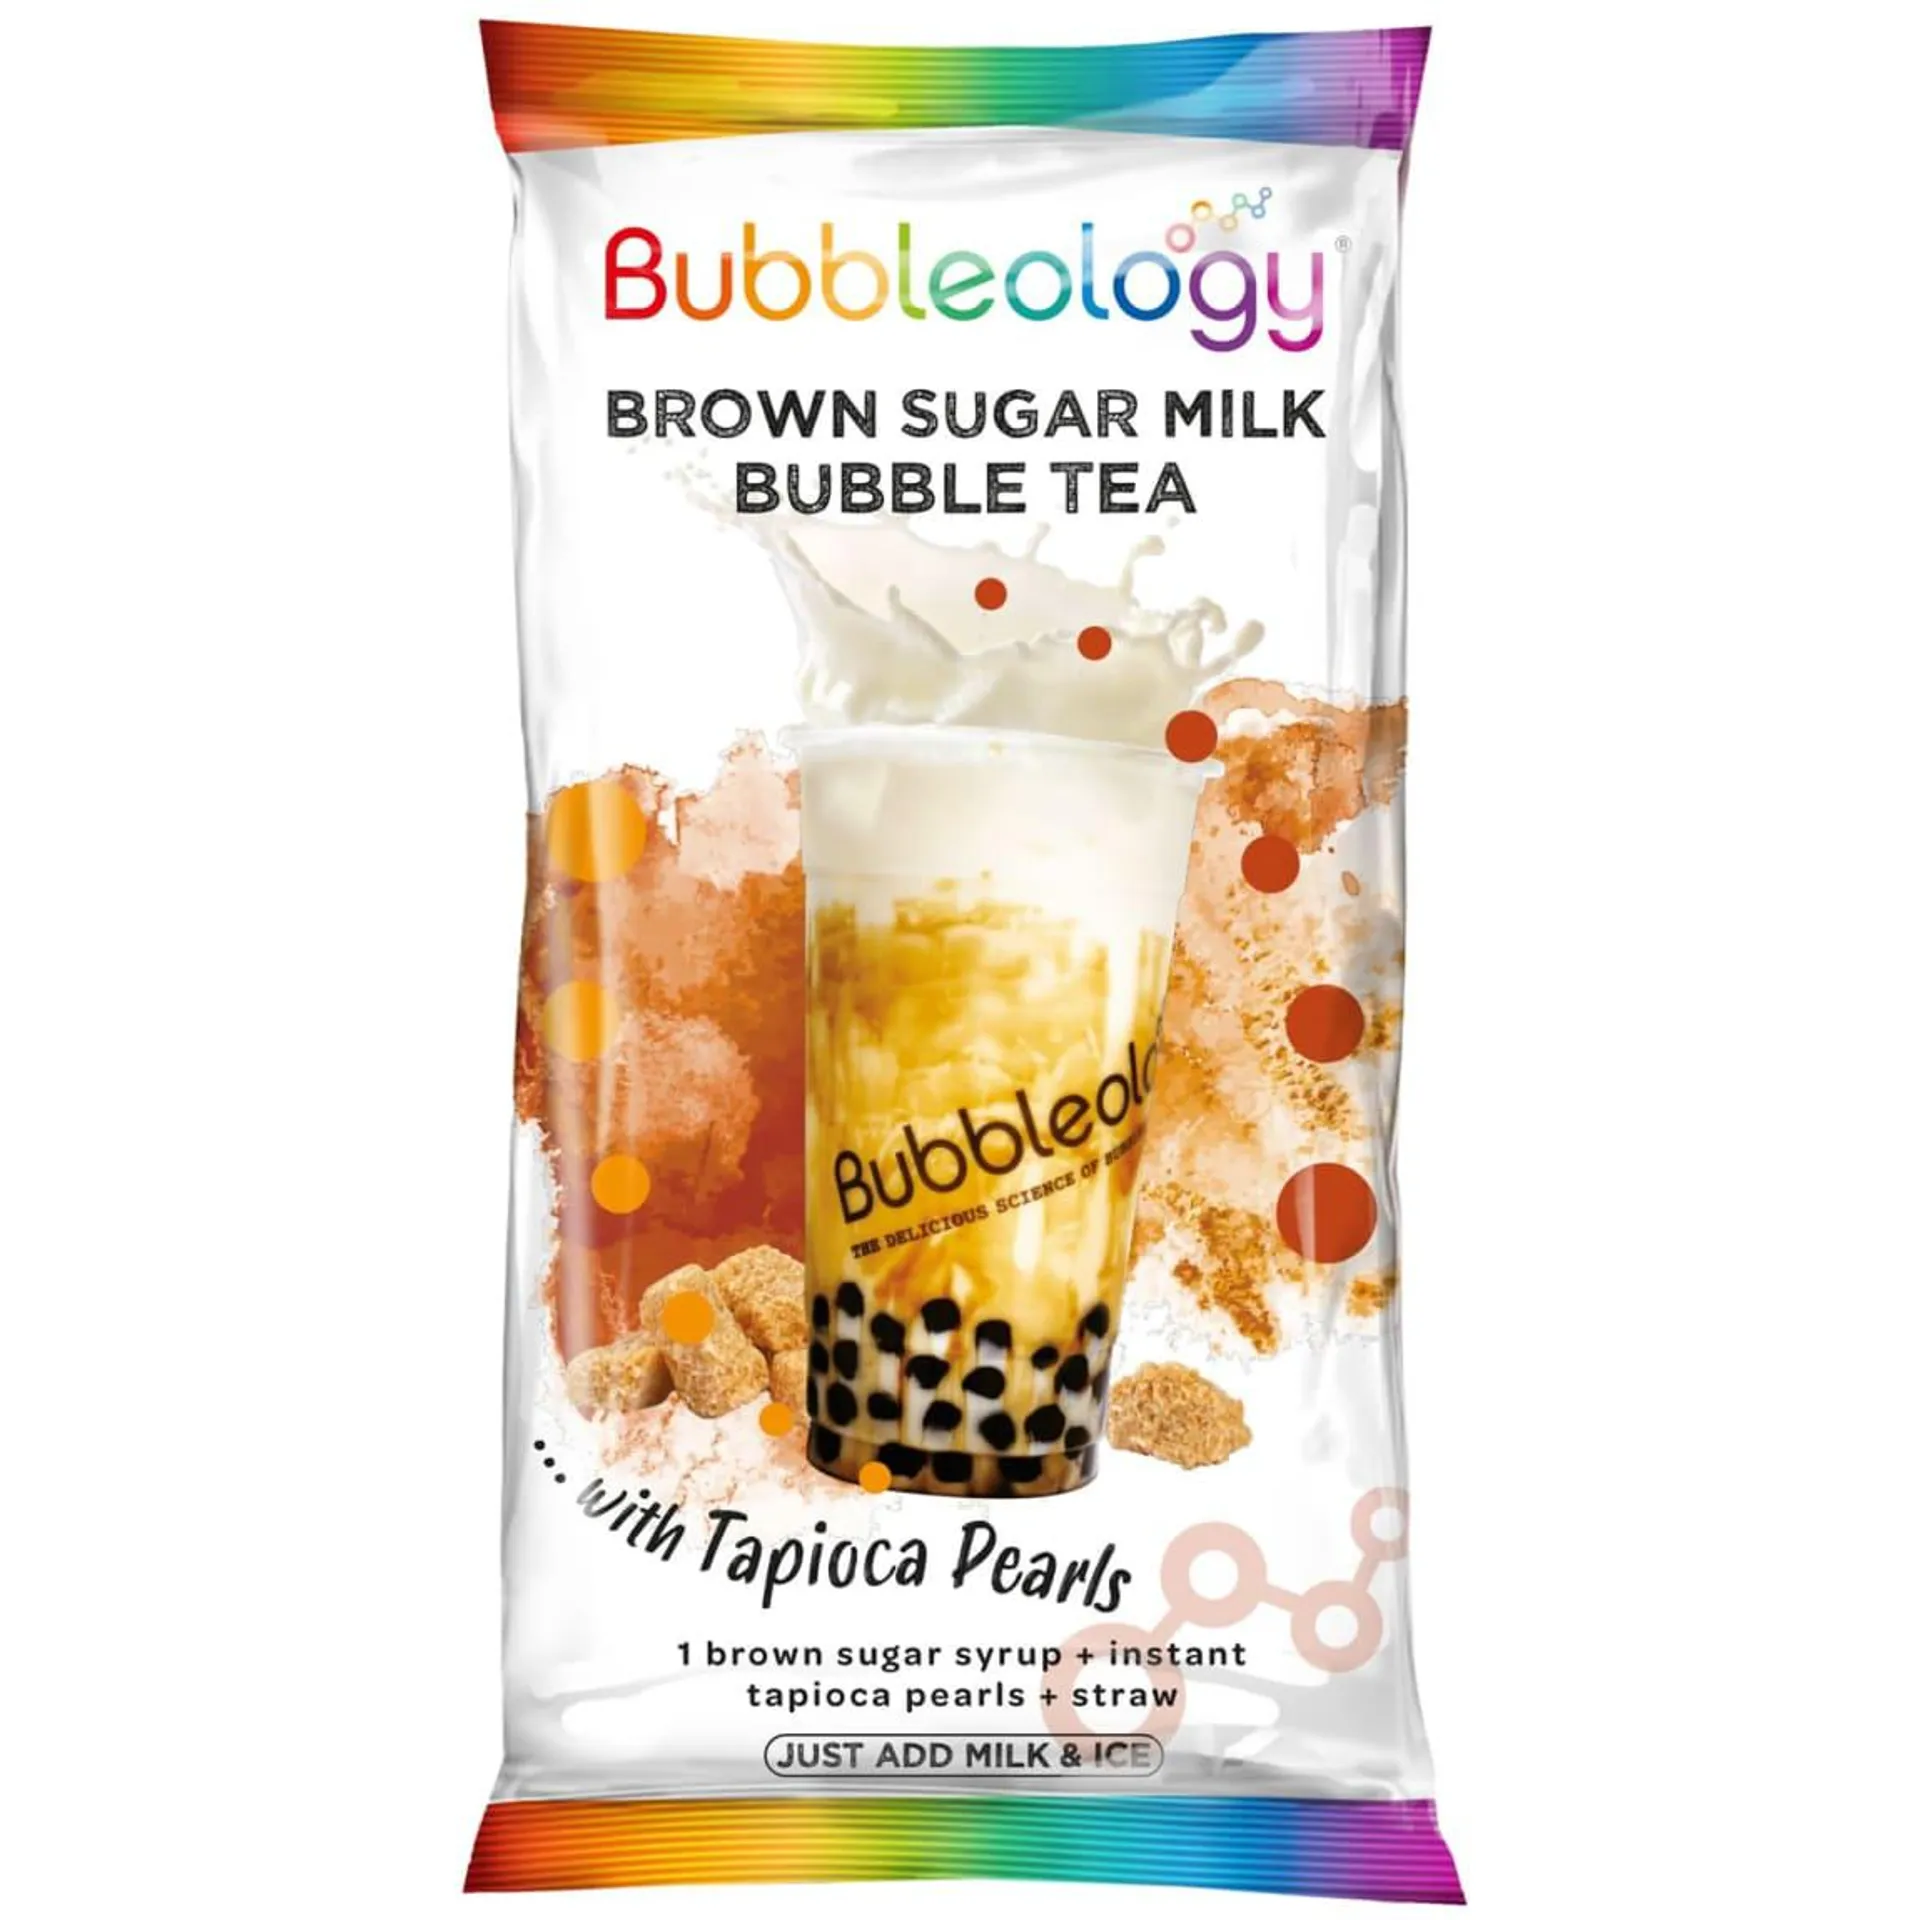 Bubbleology Brown Sugar Milk Bubble Tea